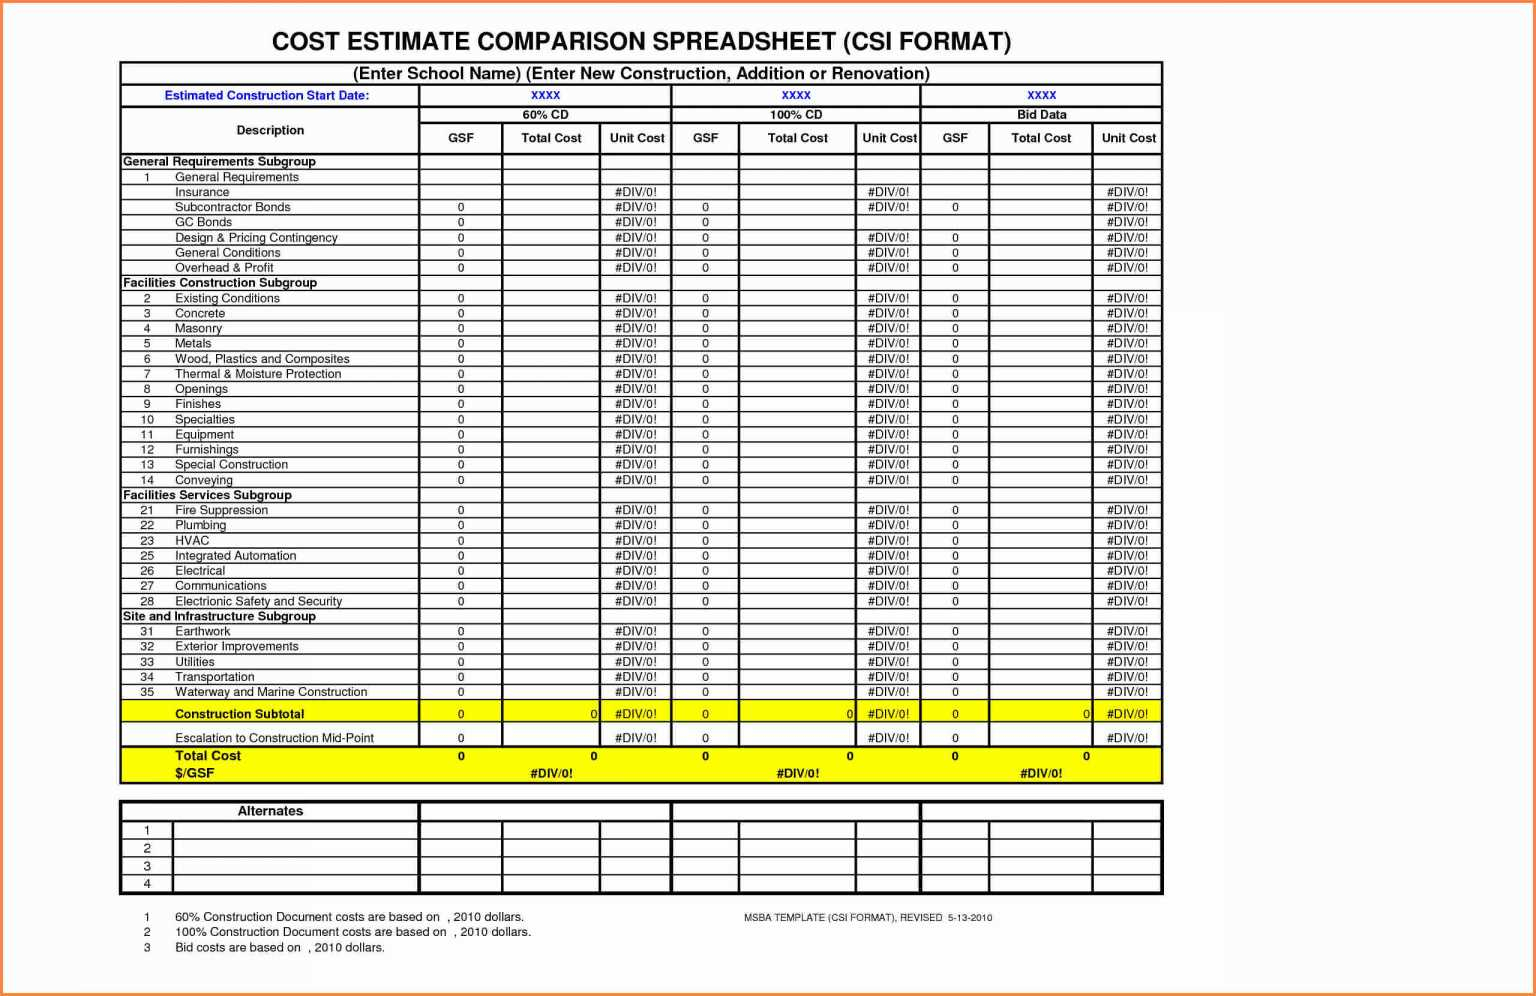 Building Cost Estimator Spreadsheet For Construction Estimating And Building Cost Estimator Spreadsheet